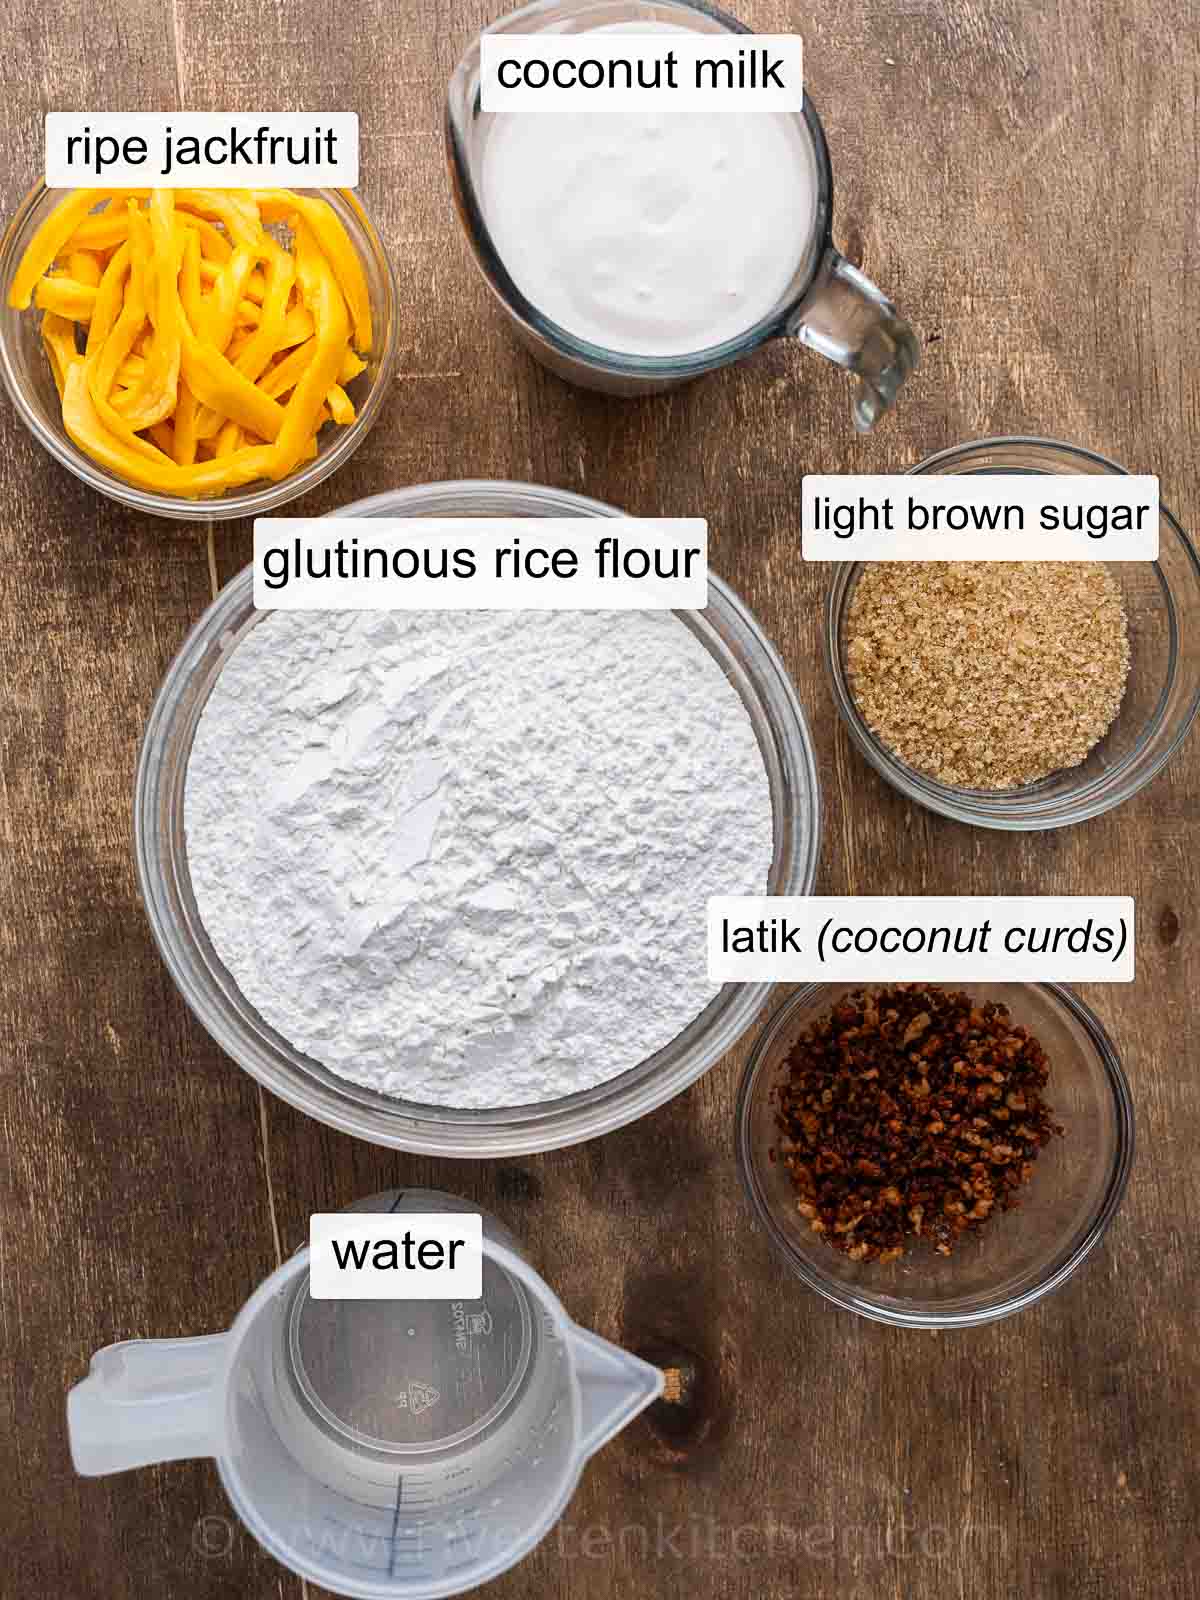 ripe jackfruit, glutinous rice flour, water, coconut curds, and light brown sugar.